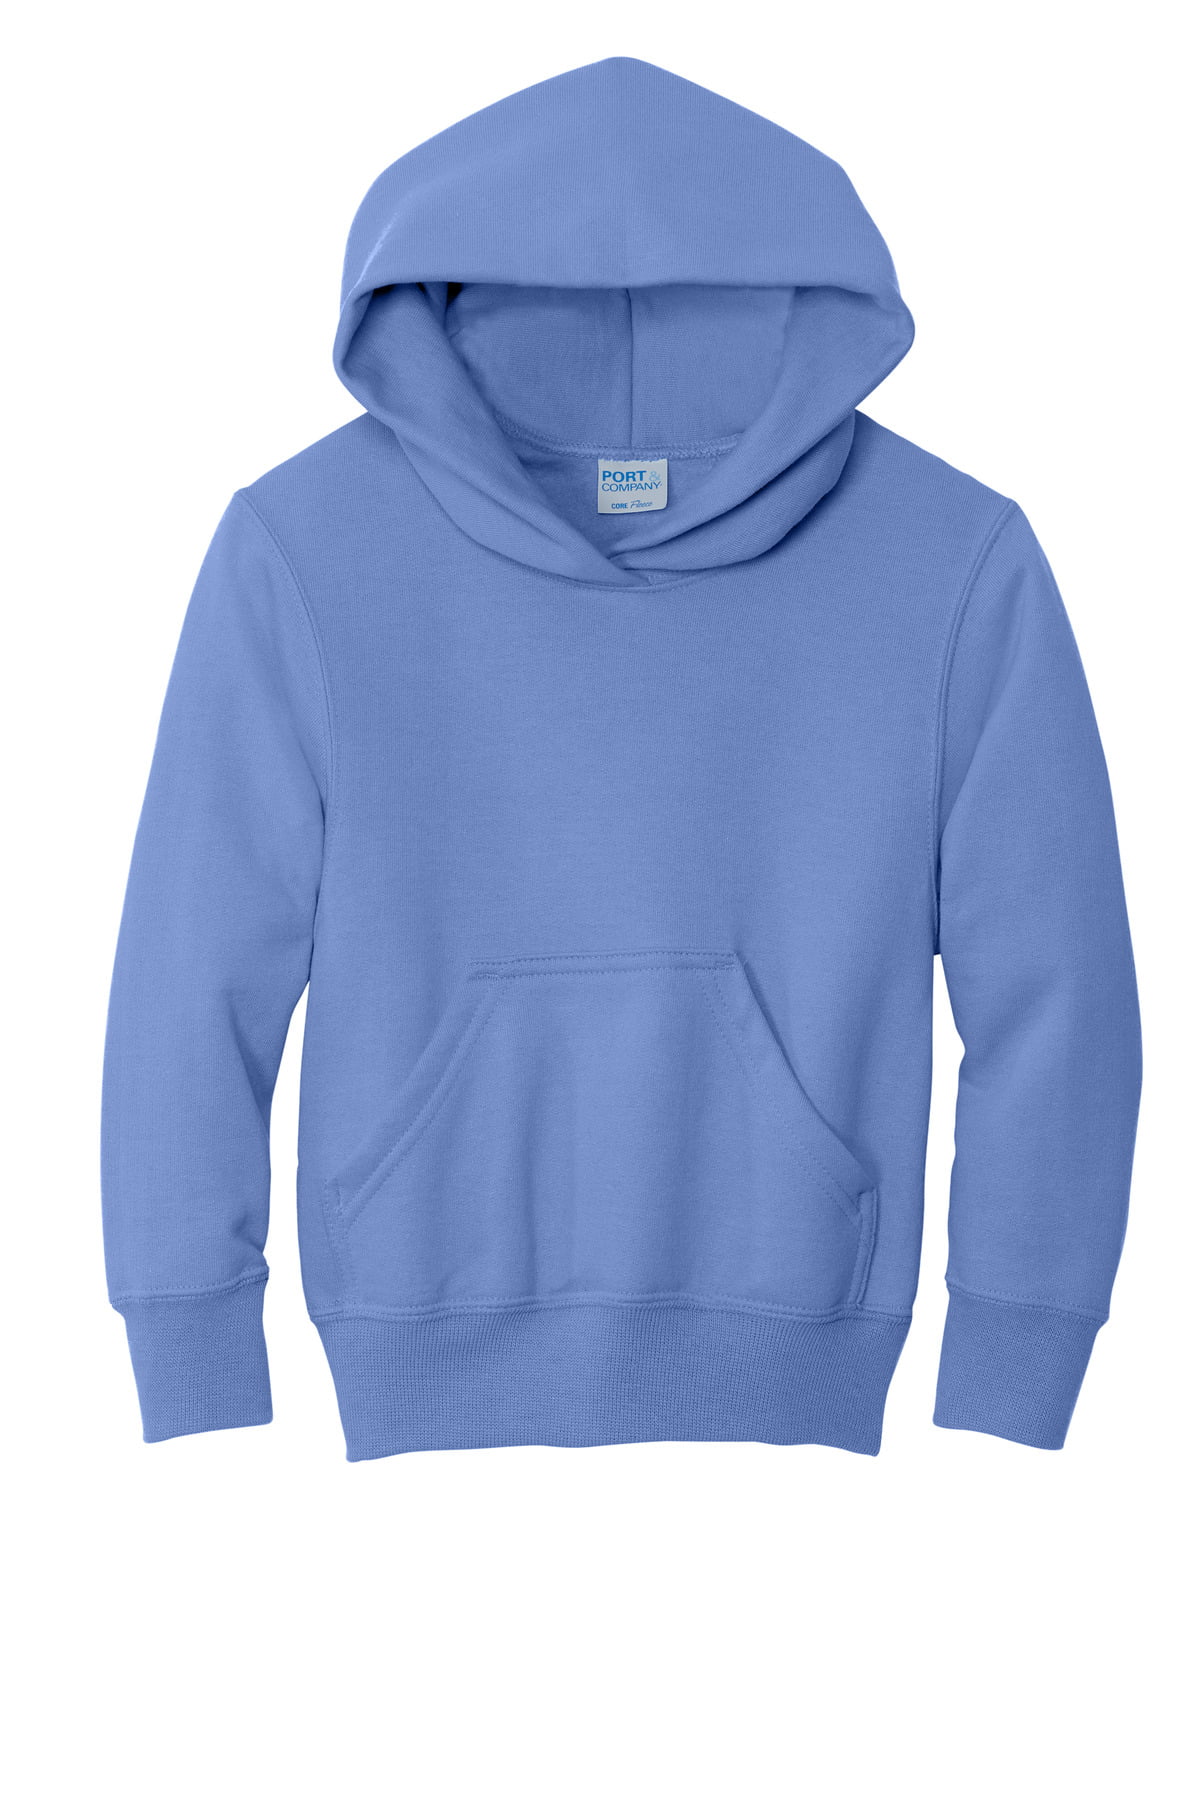 Port & Company Youth Hooded Pullover (Carolina Blue) Sweatshirt-L Core Fleece